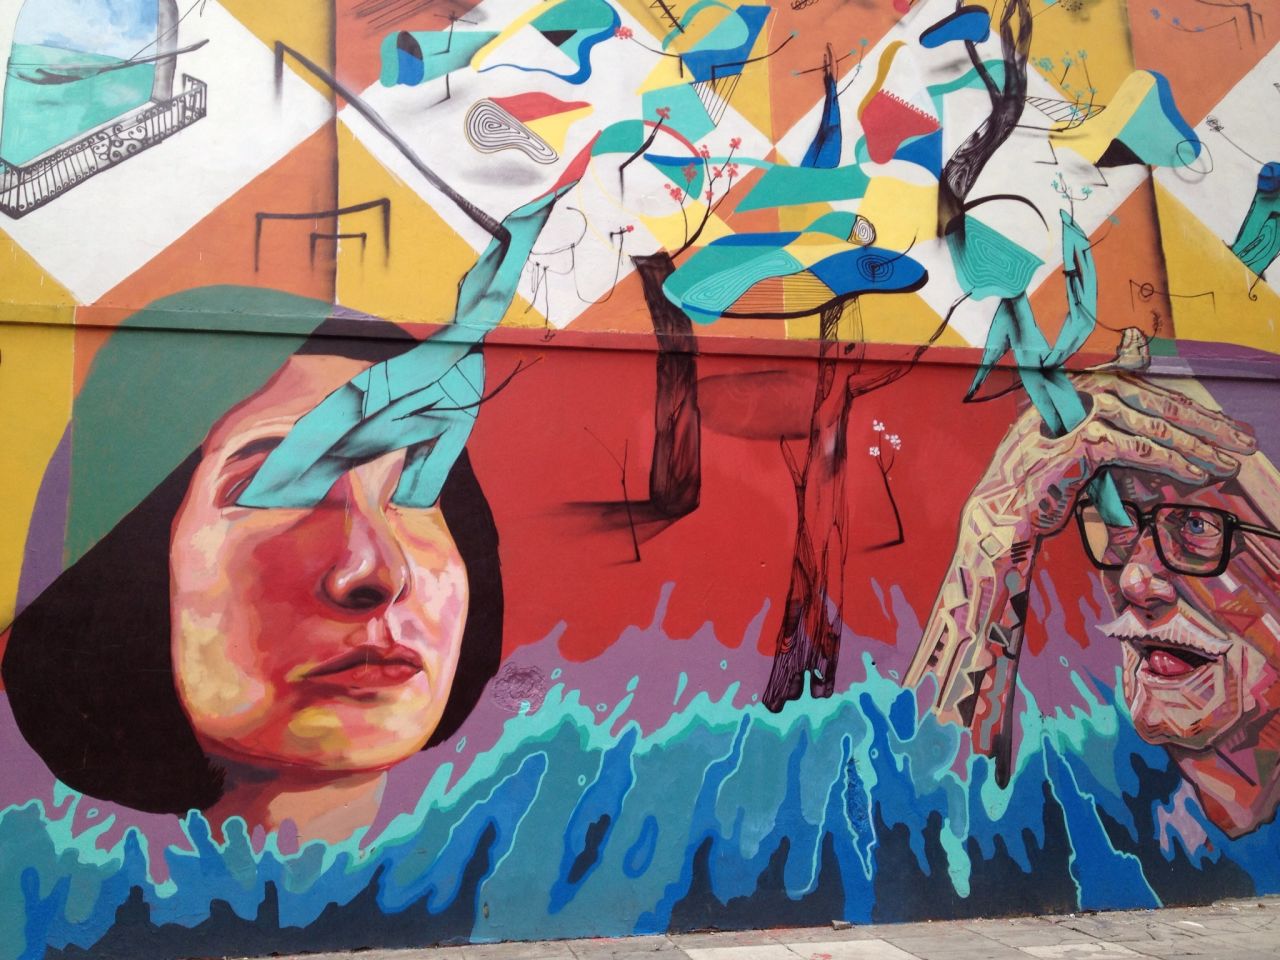 Surreal street art is seen on a side street near Plaza Guemes.